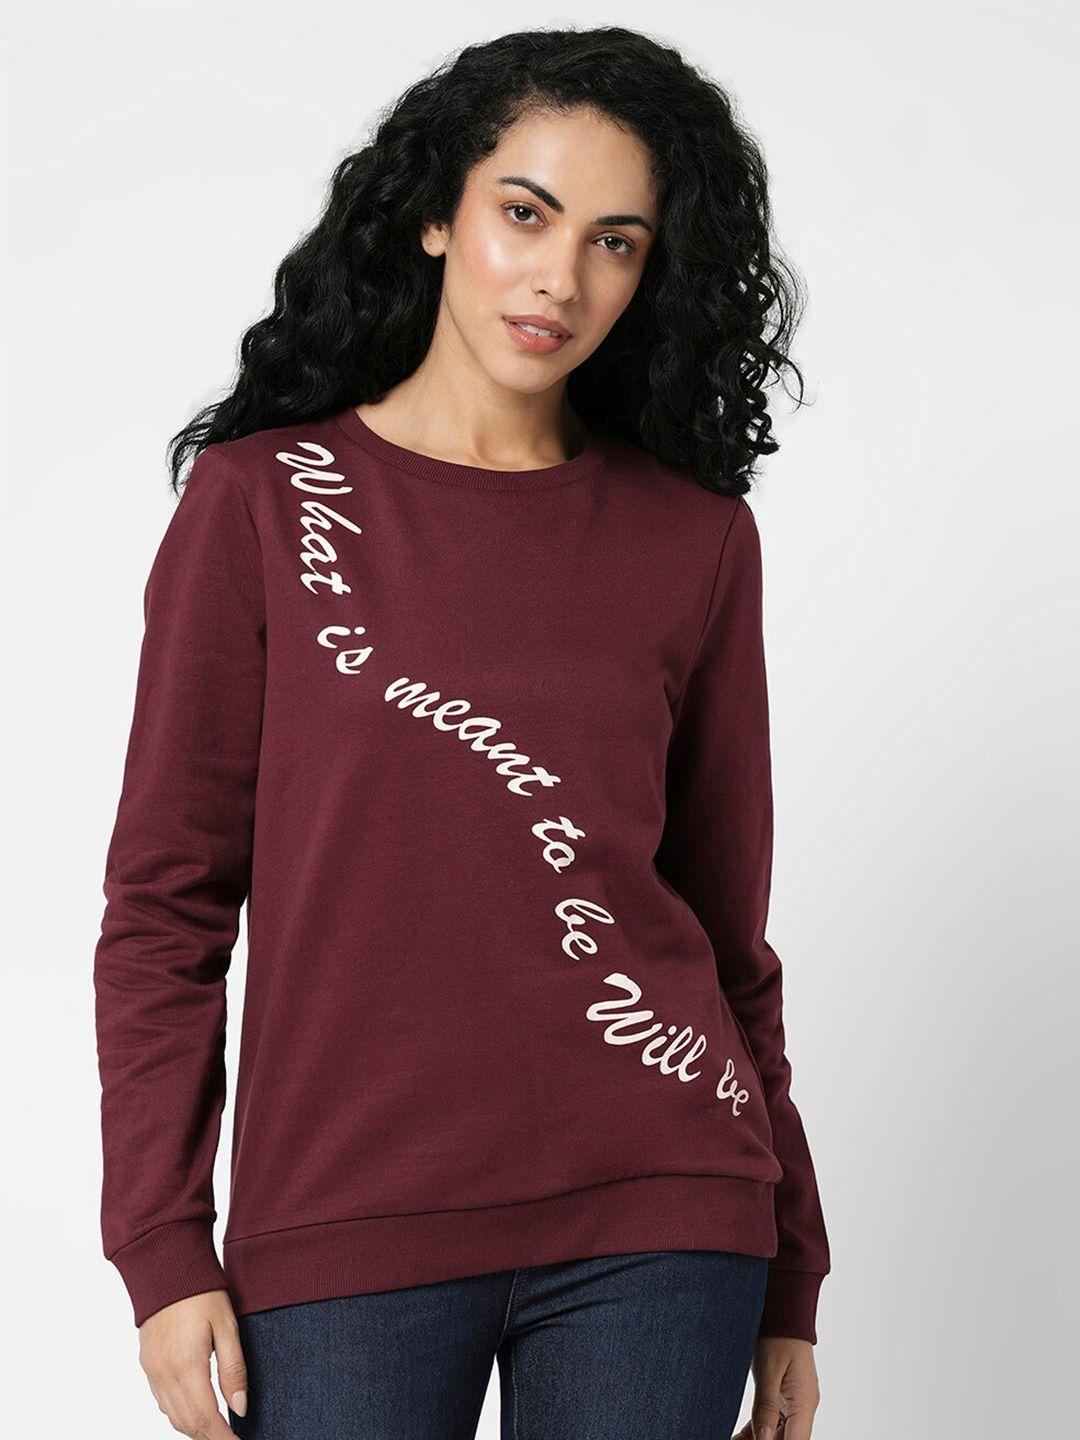 vero moda typography printed pure cotton sweatshirt